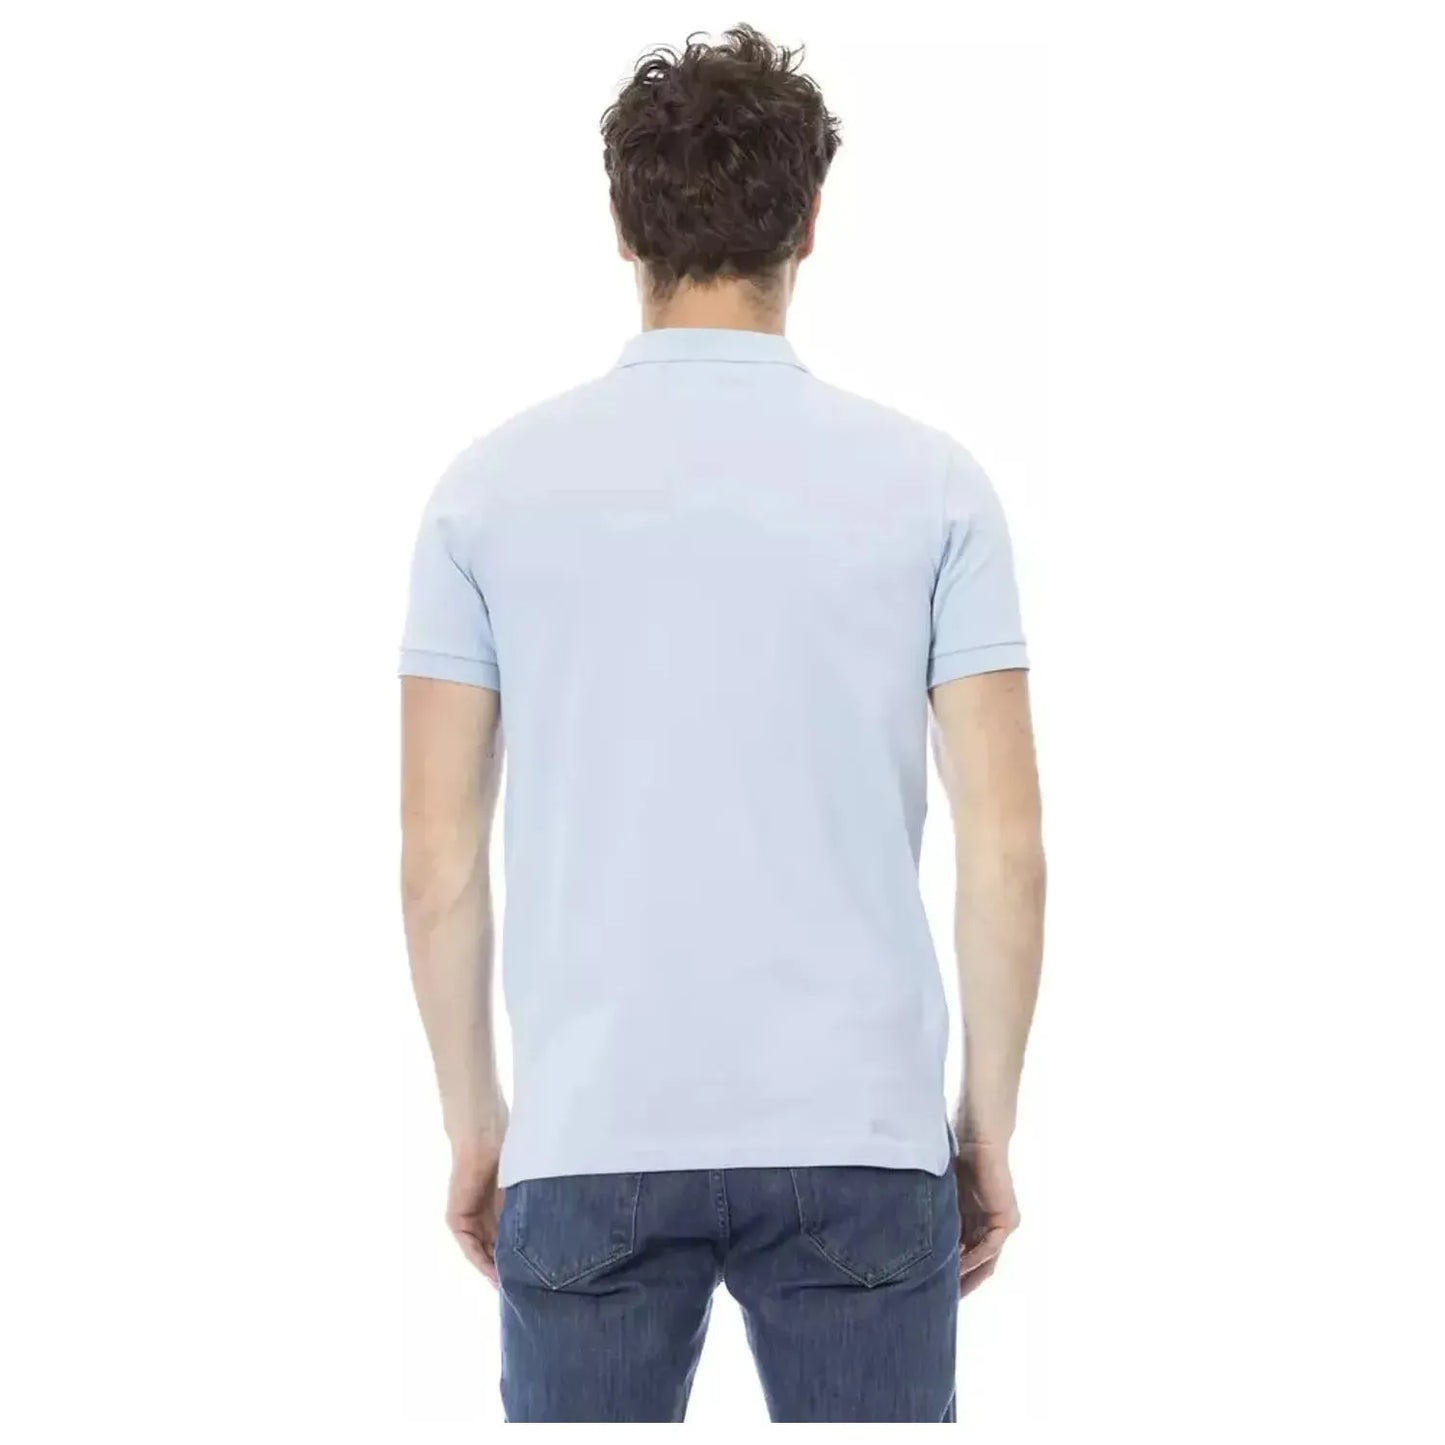 Baldinini Trend Chic Light Blue Embroidered Polo Shirt light-blue-cotton-polo-shirt-2